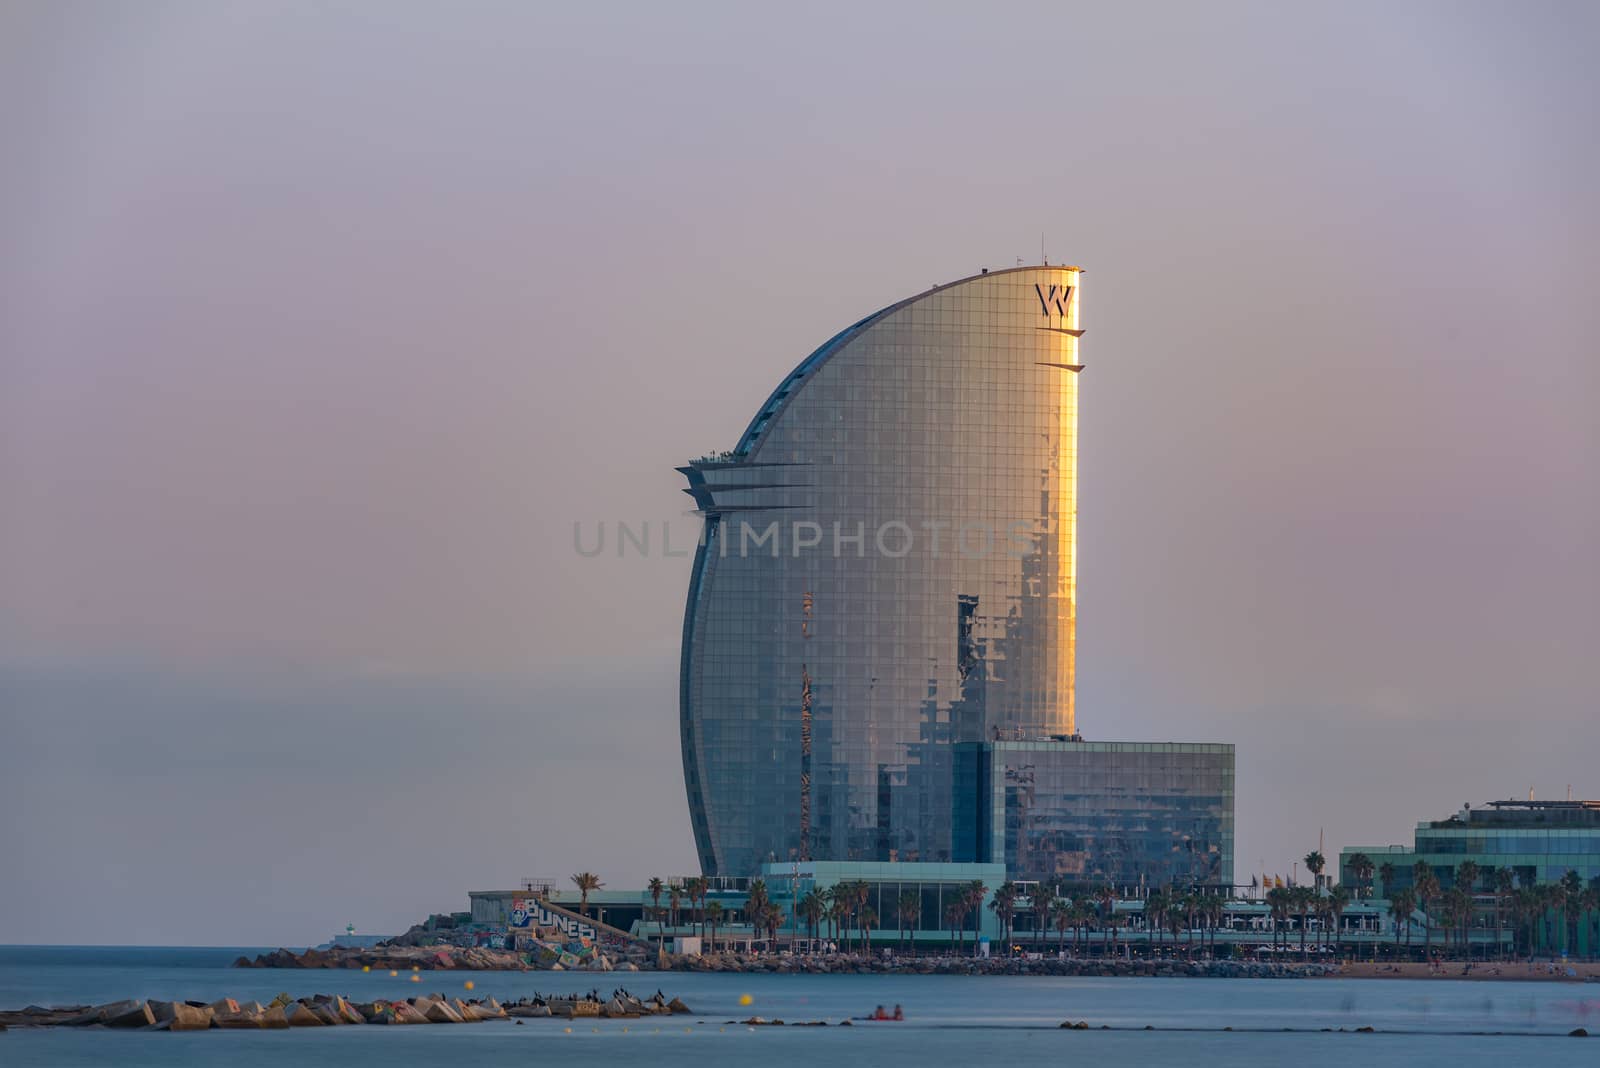 Designed by architect Ricardo Bofill, the modern skyscraper W Ho by martinscphoto